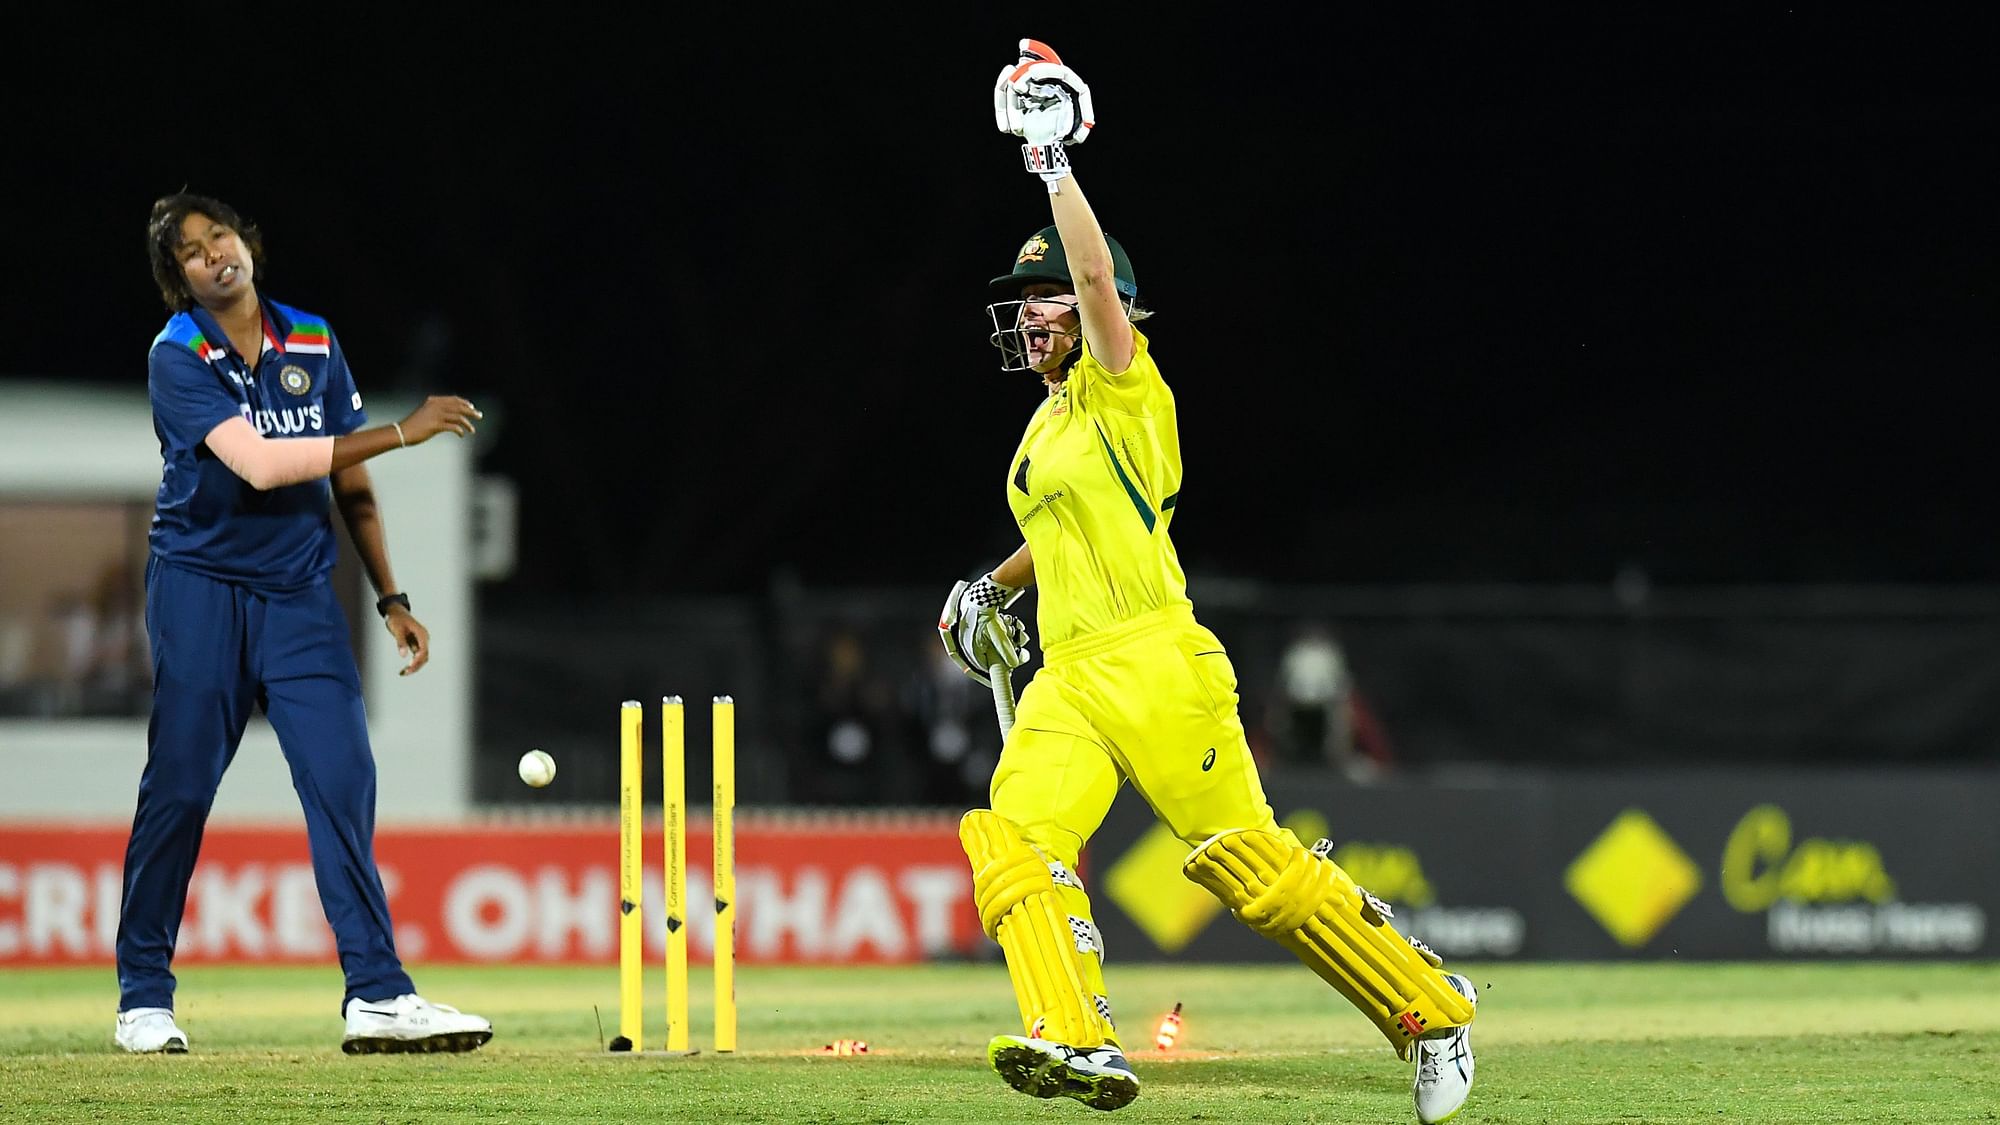 <div class="paragraphs"><p>Australia won a thriller by 5 wickets against India&nbsp;</p></div>